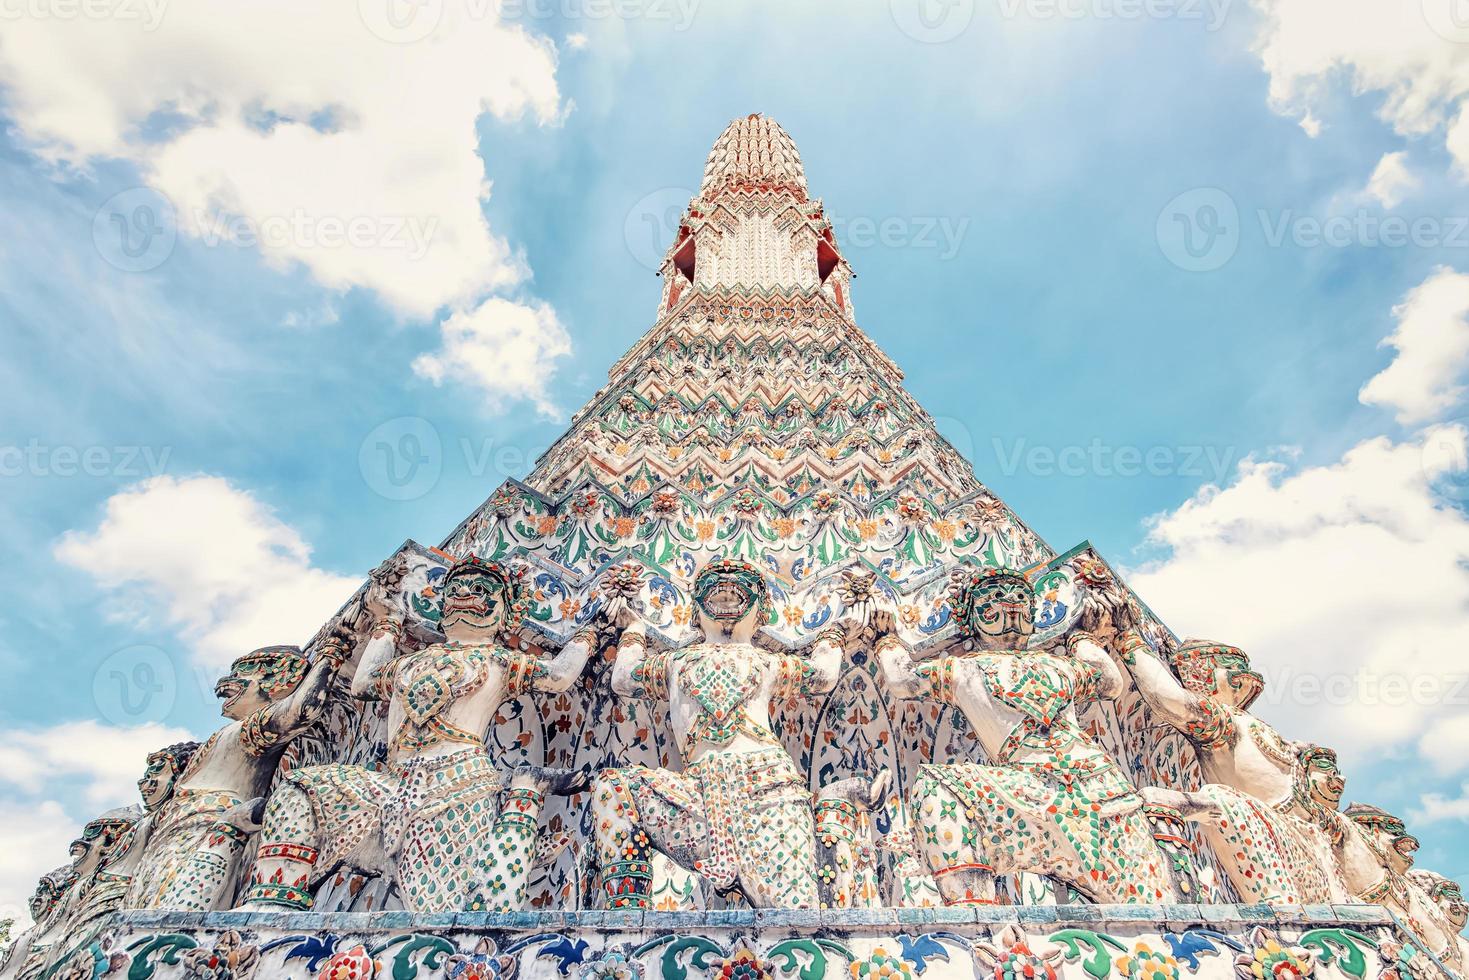 Templo Wat Arun en Bangkok, Tailandia foto